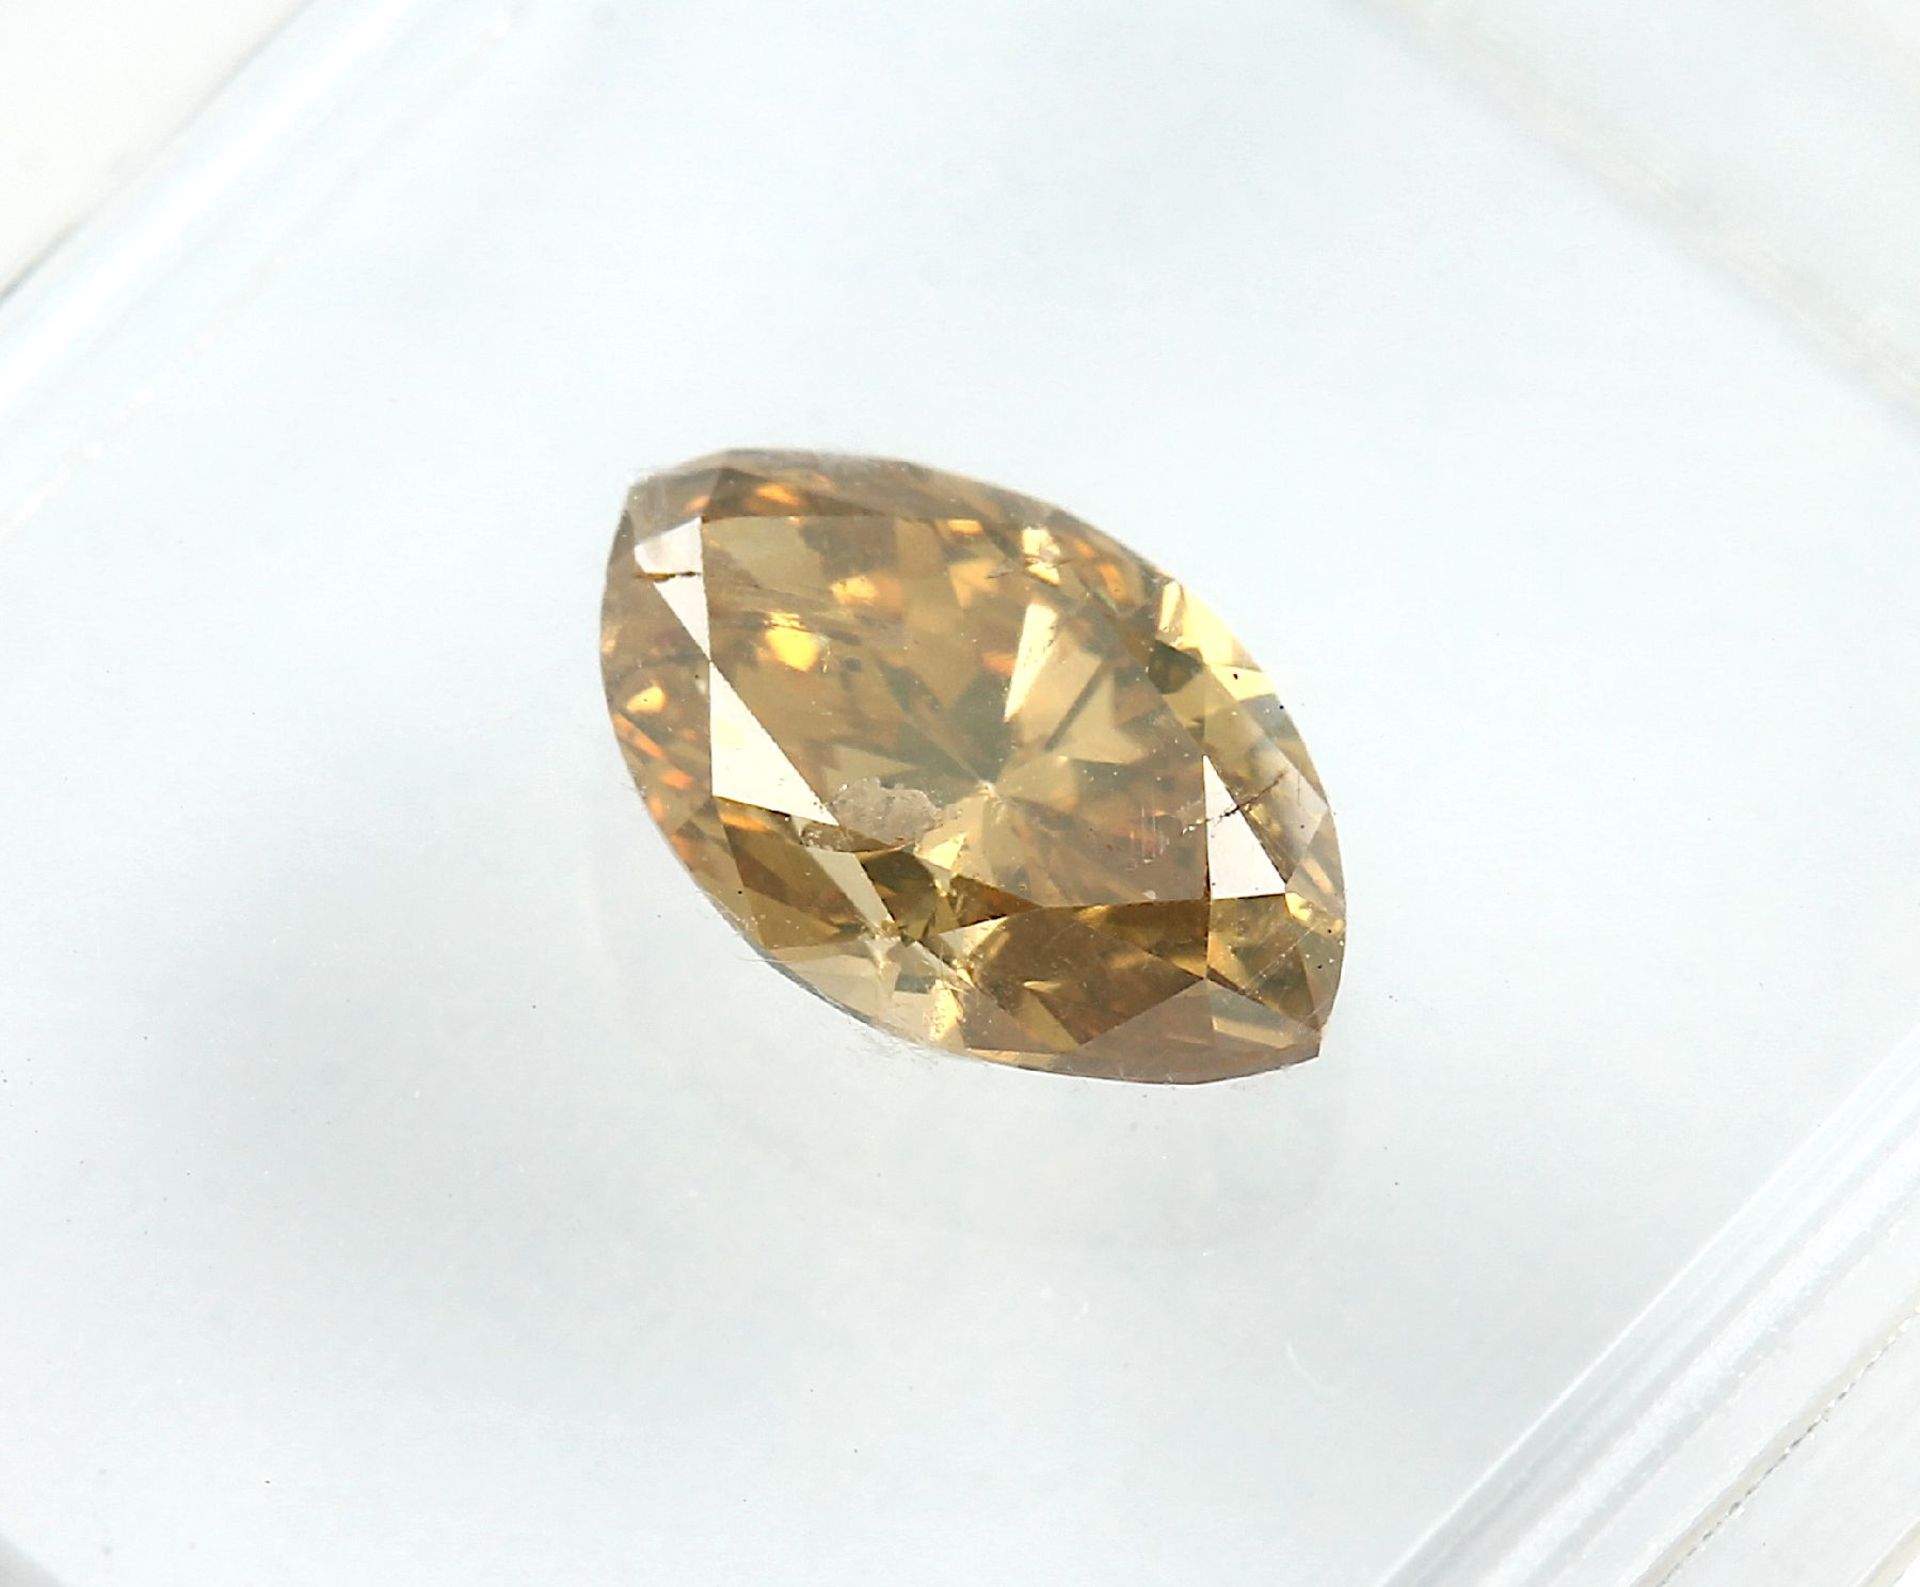 Lose Diamantnavette, 0.67 ct, 7.29 x 4.69 x3.18 mm, natural fancy deep brownish orangy yellow, - Bild 2 aus 3